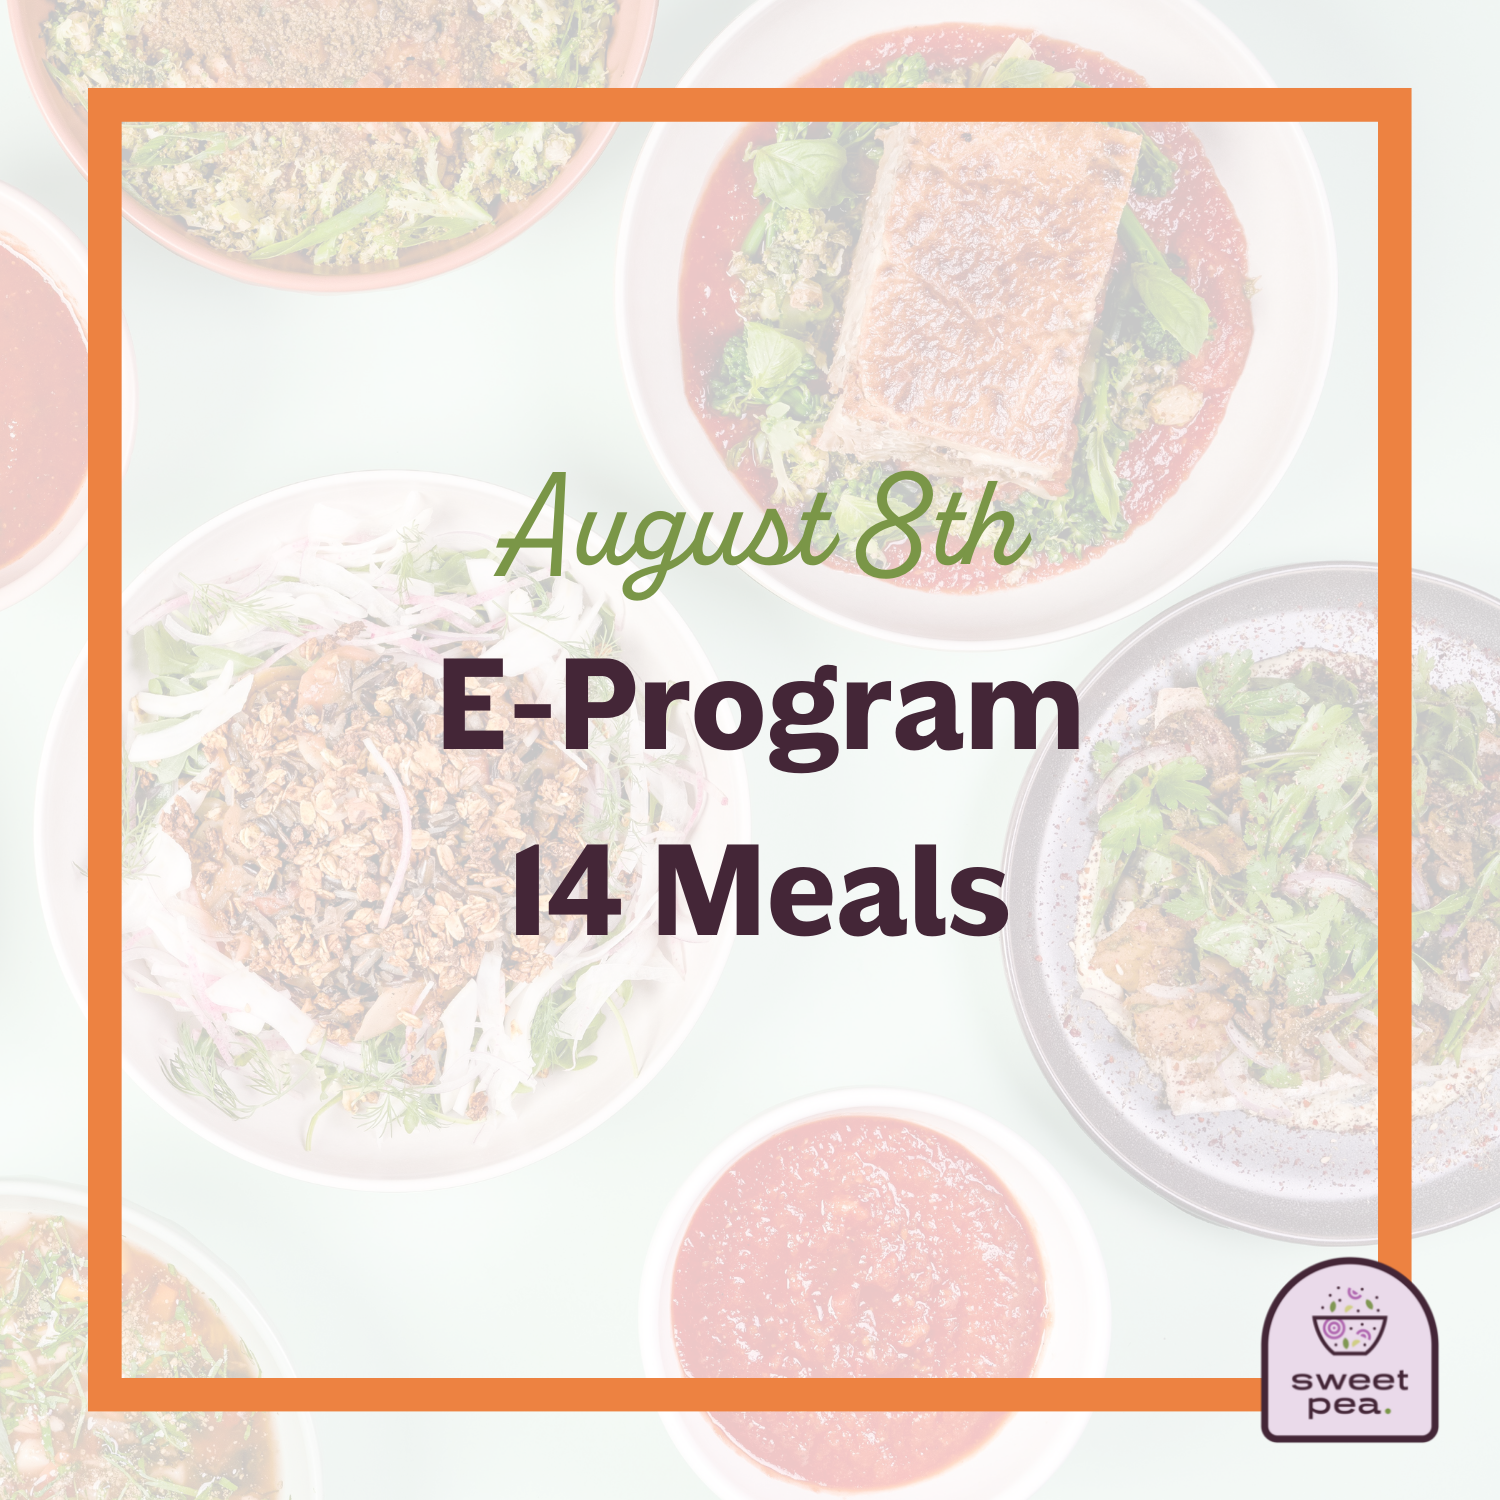 E-Program: 14 Meals (August)